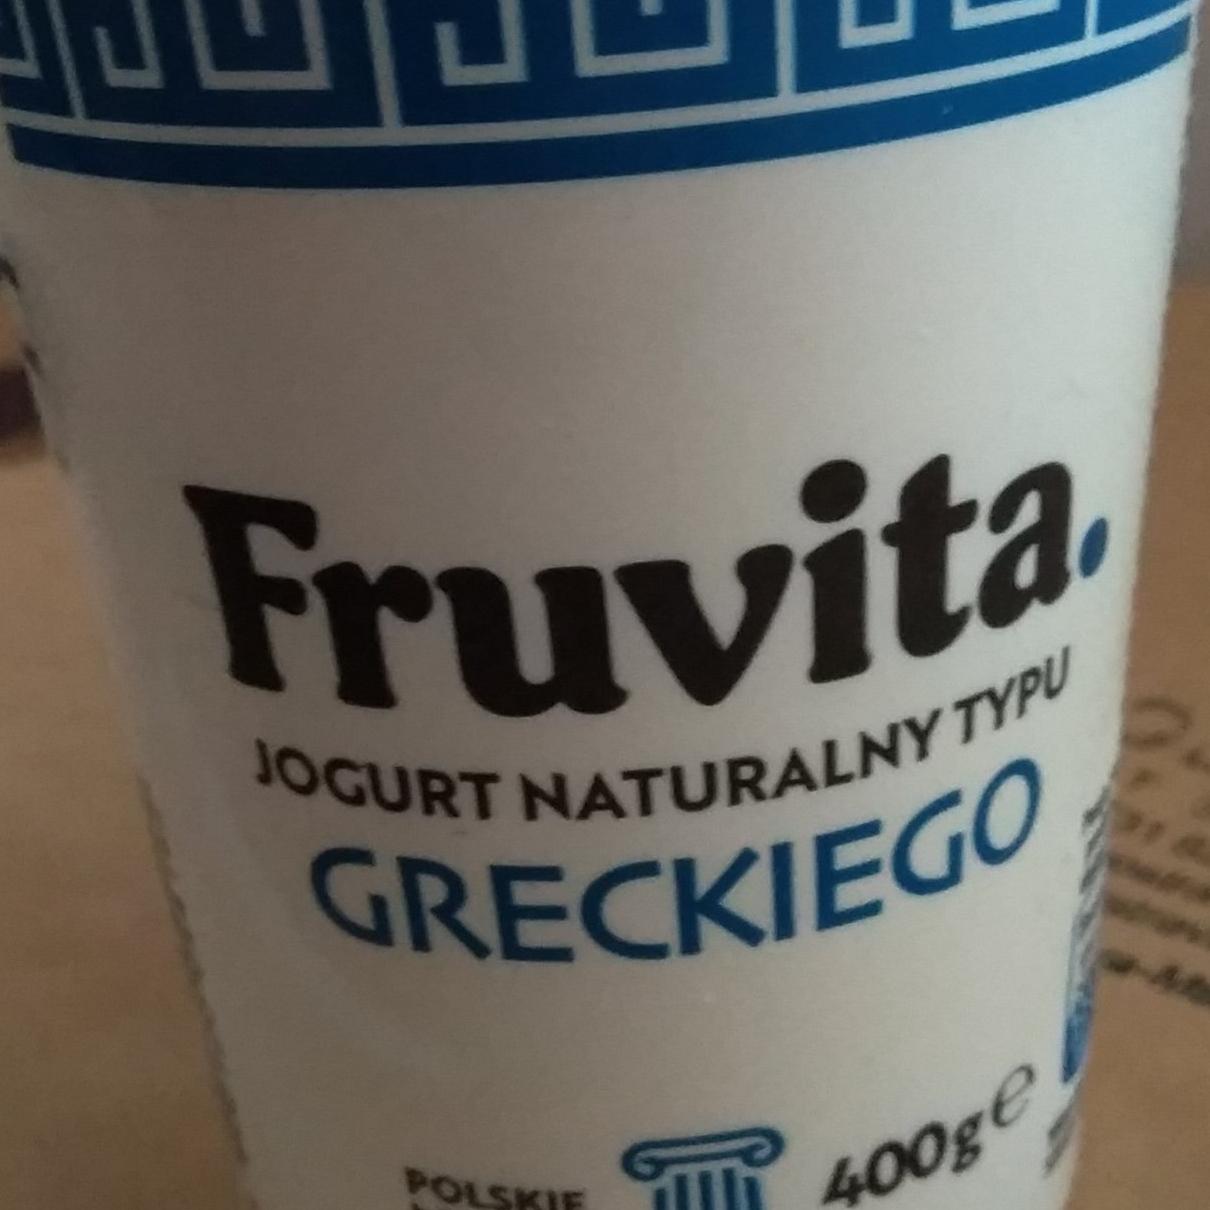 Fotografie - Jogurt naturalny typu greckiego FruVita